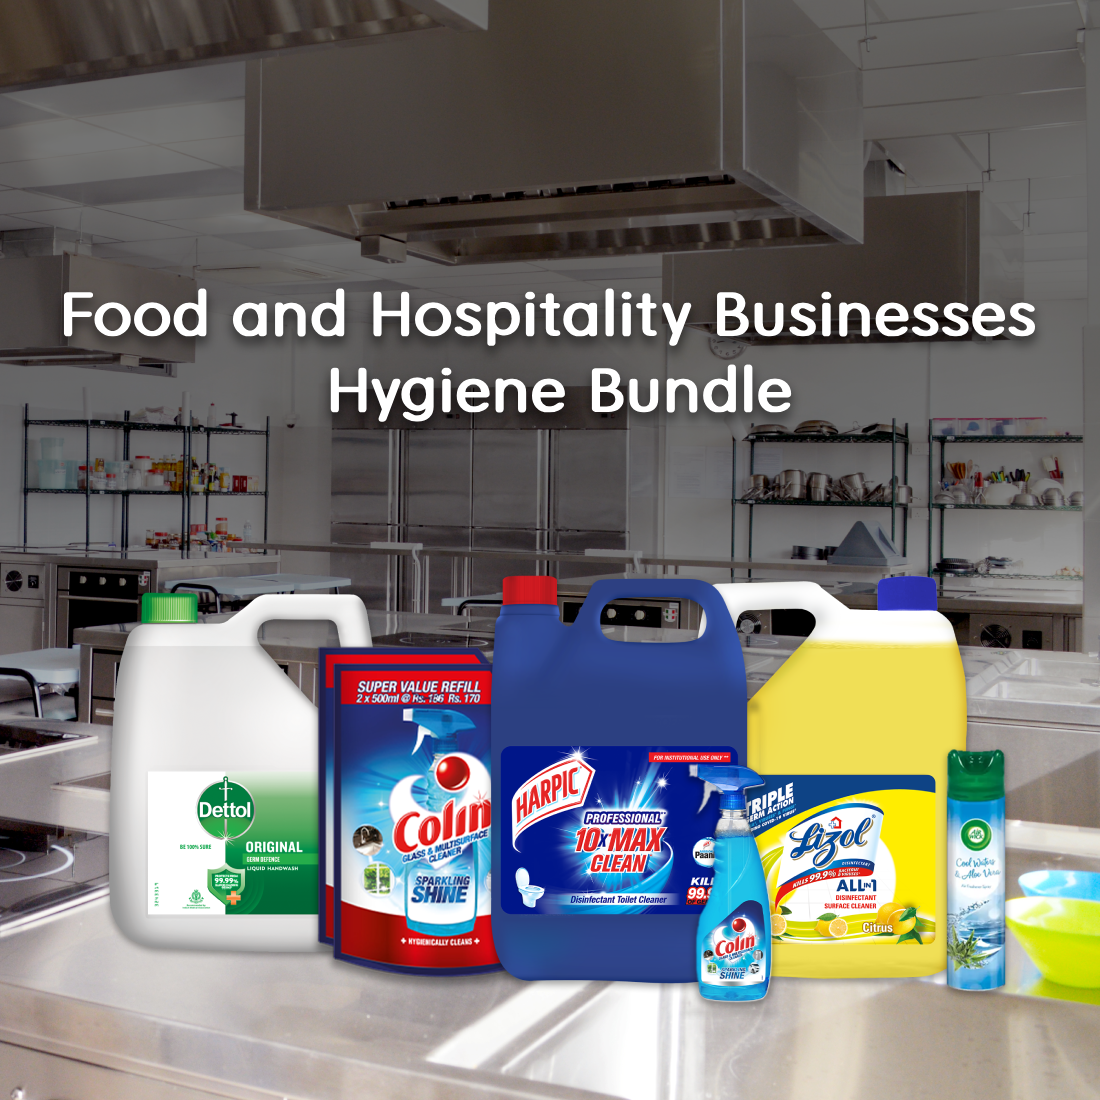 Food and Hospitality Businesses Hygiene Bundle